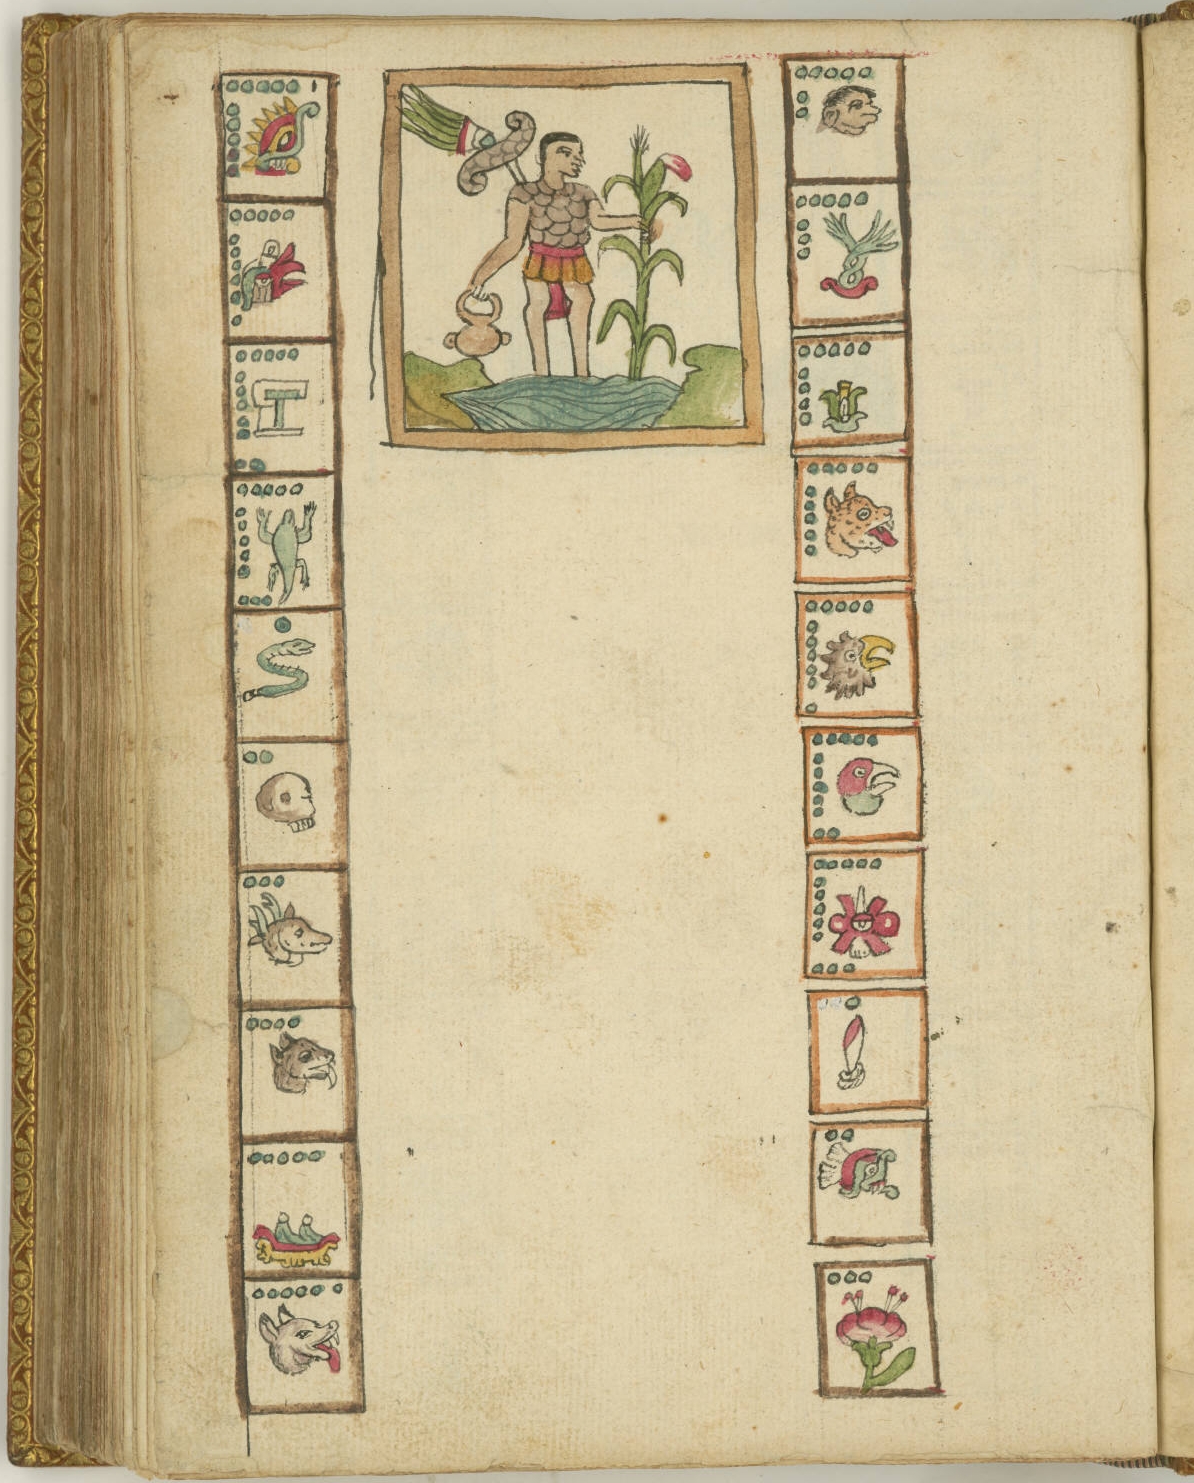 Aztec Calendar - Toval/Ramirez manuscript